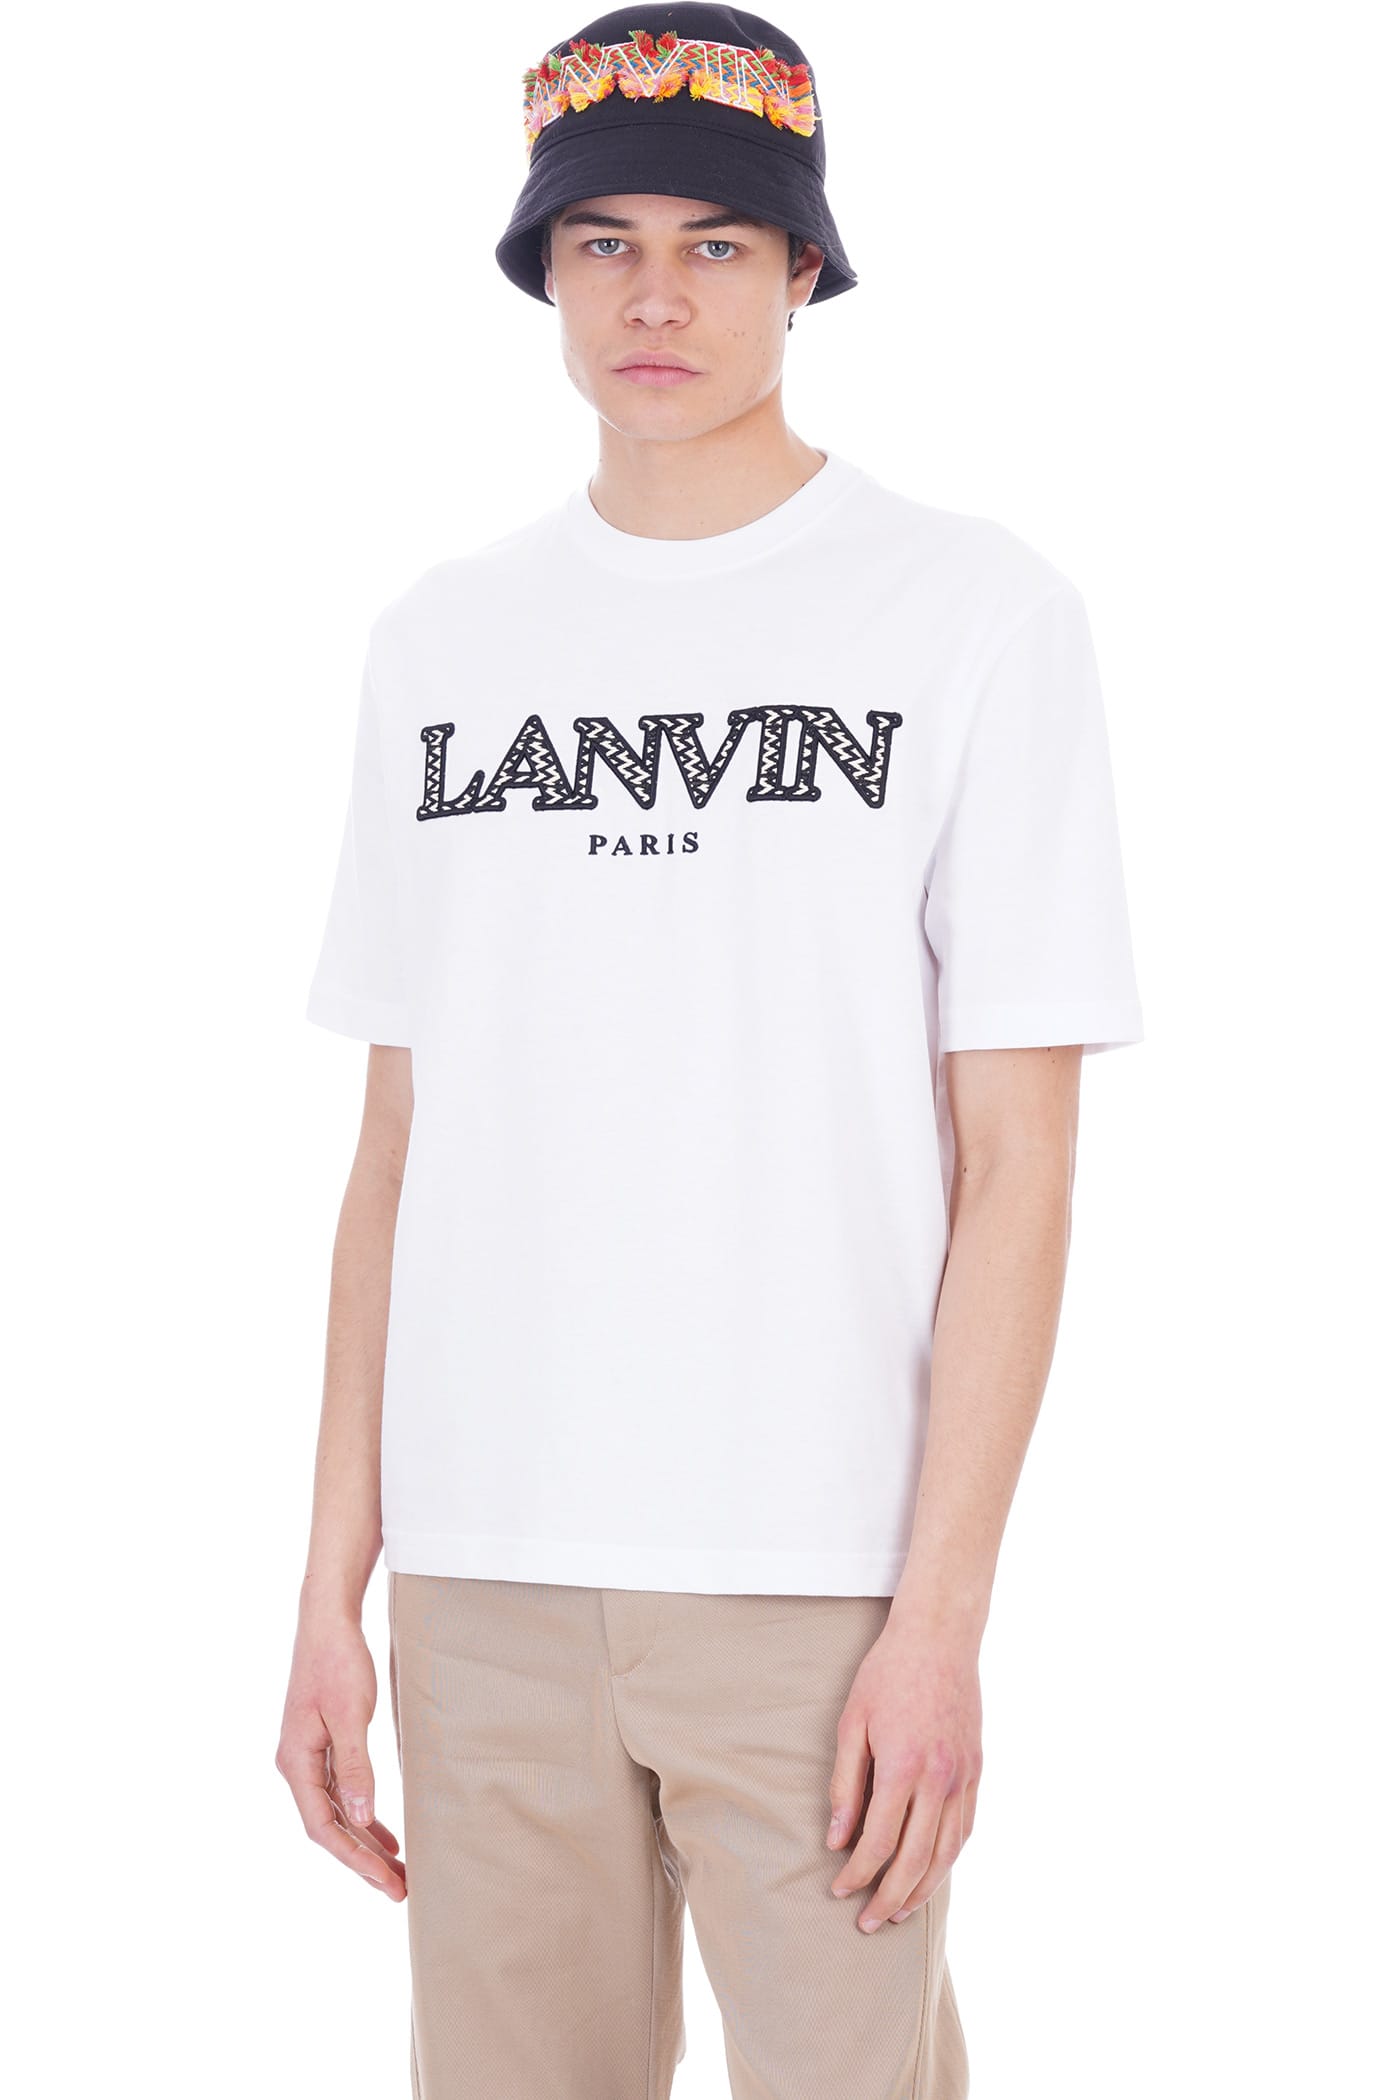 LANVIN T-SHIRT IN WHITE COTTON